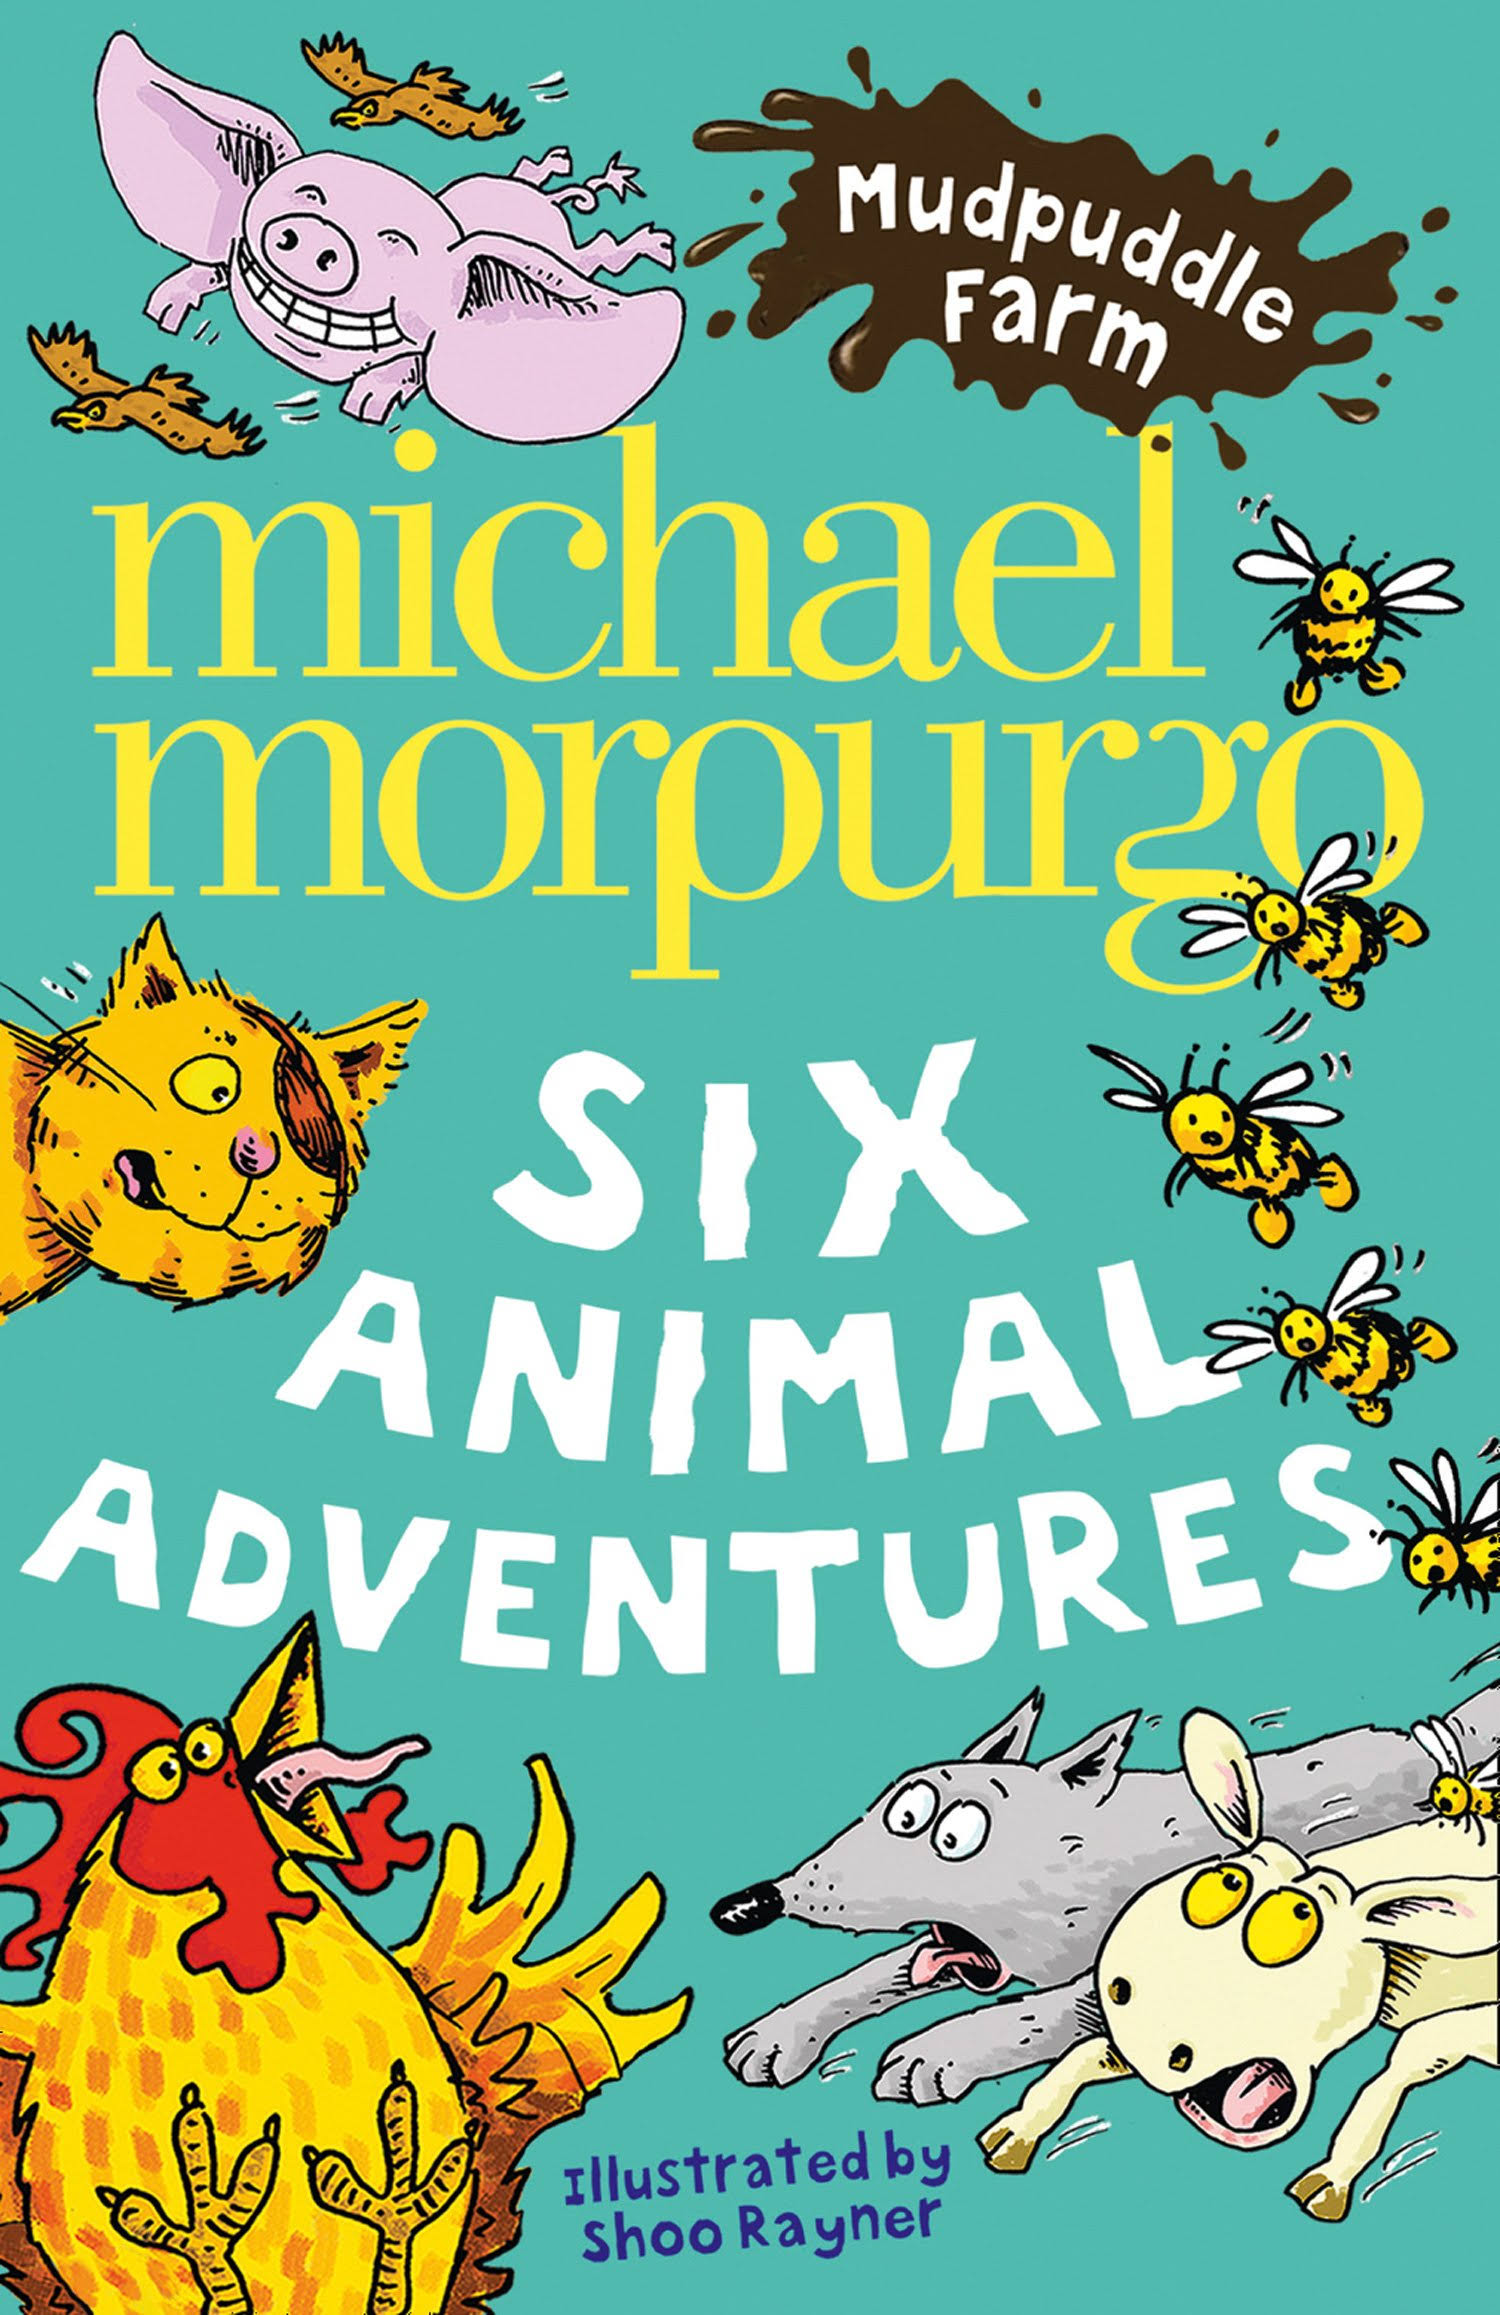 Mudpuddle Farm: Six Animal Adventures - Michael Morpurgo